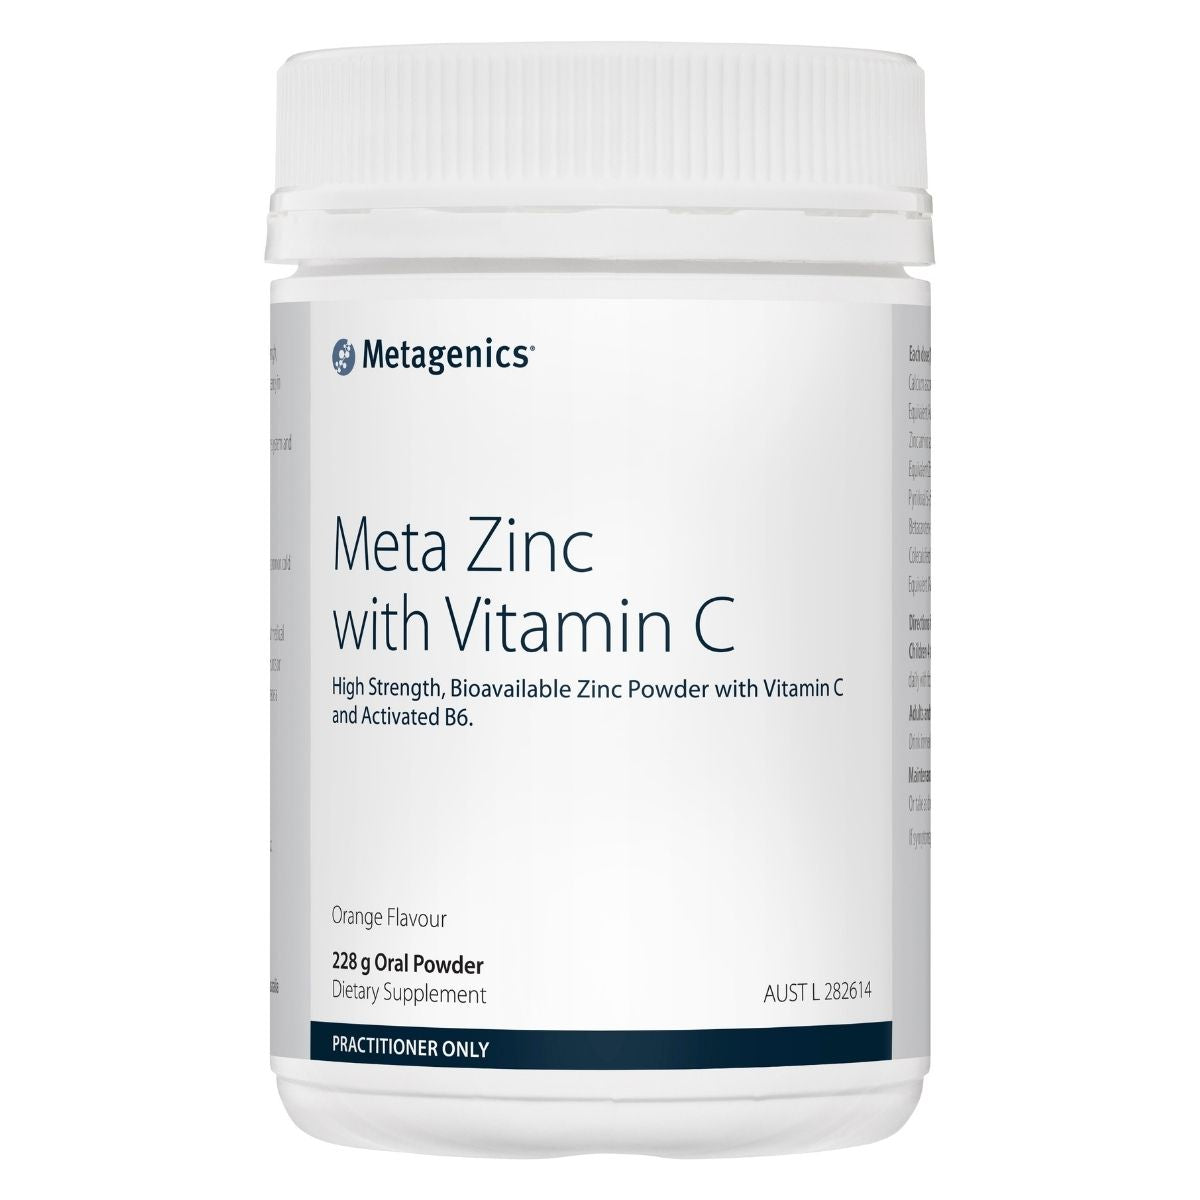 Metagenics Meta Zinc with Vitamin C 228g orange | Vitality and Wellness Centre